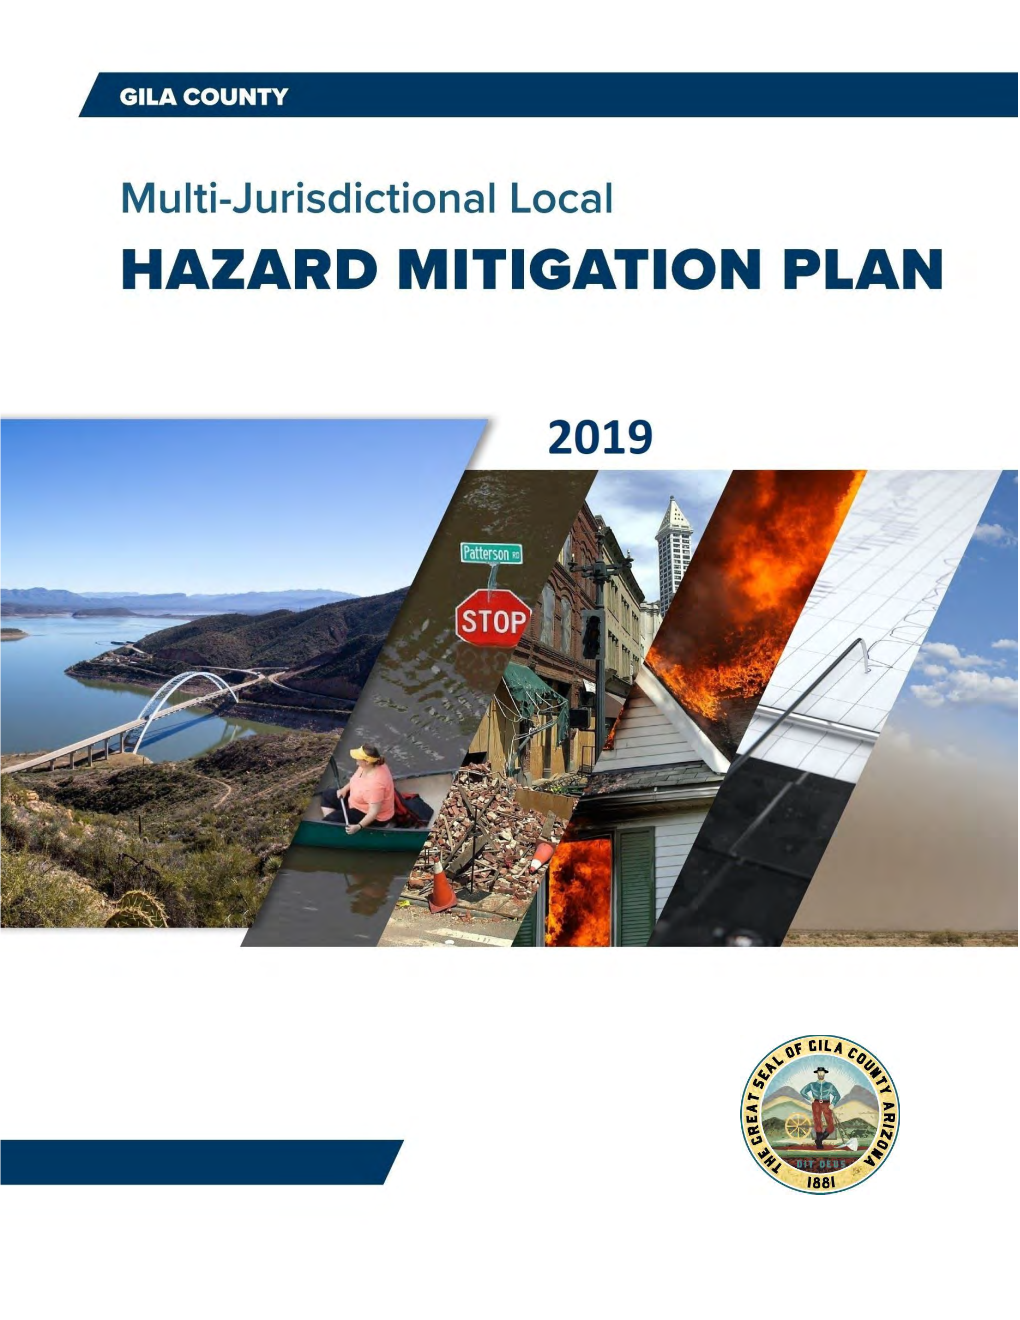 Gila County Multi-Jurisdictional Hazard Mitigation Plan